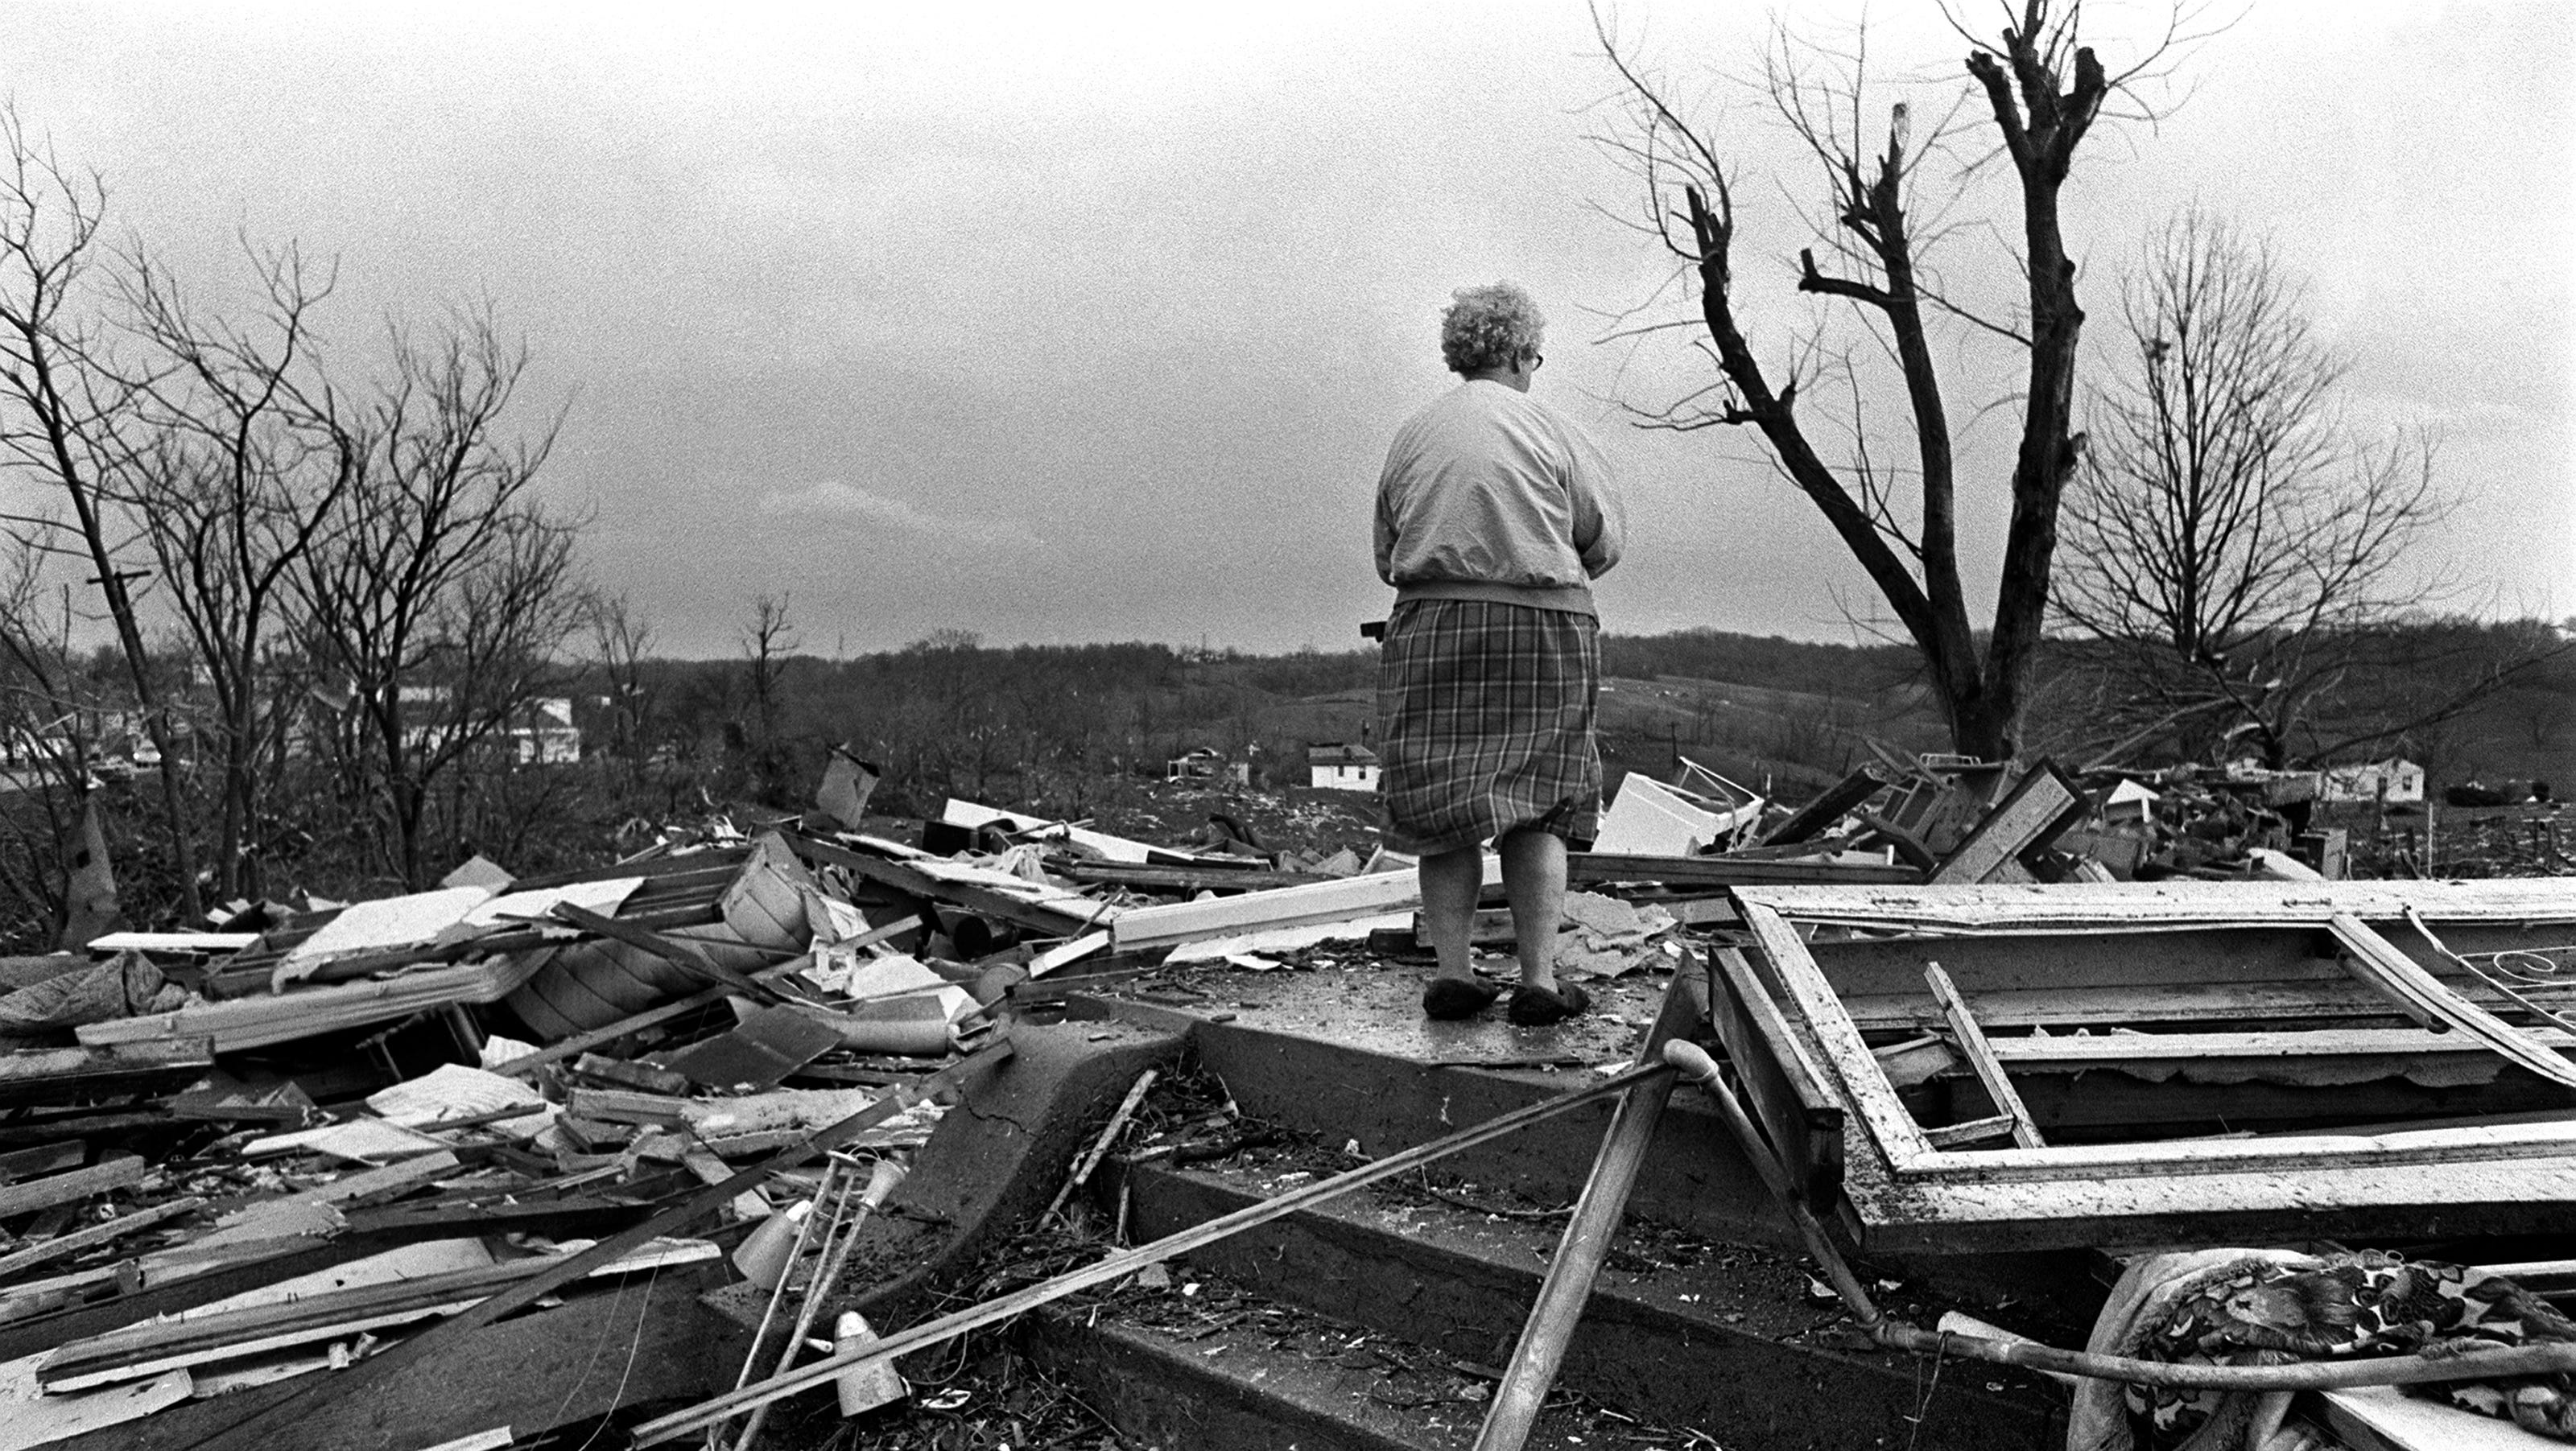 45 years ago deadliest tornadoes devastated region